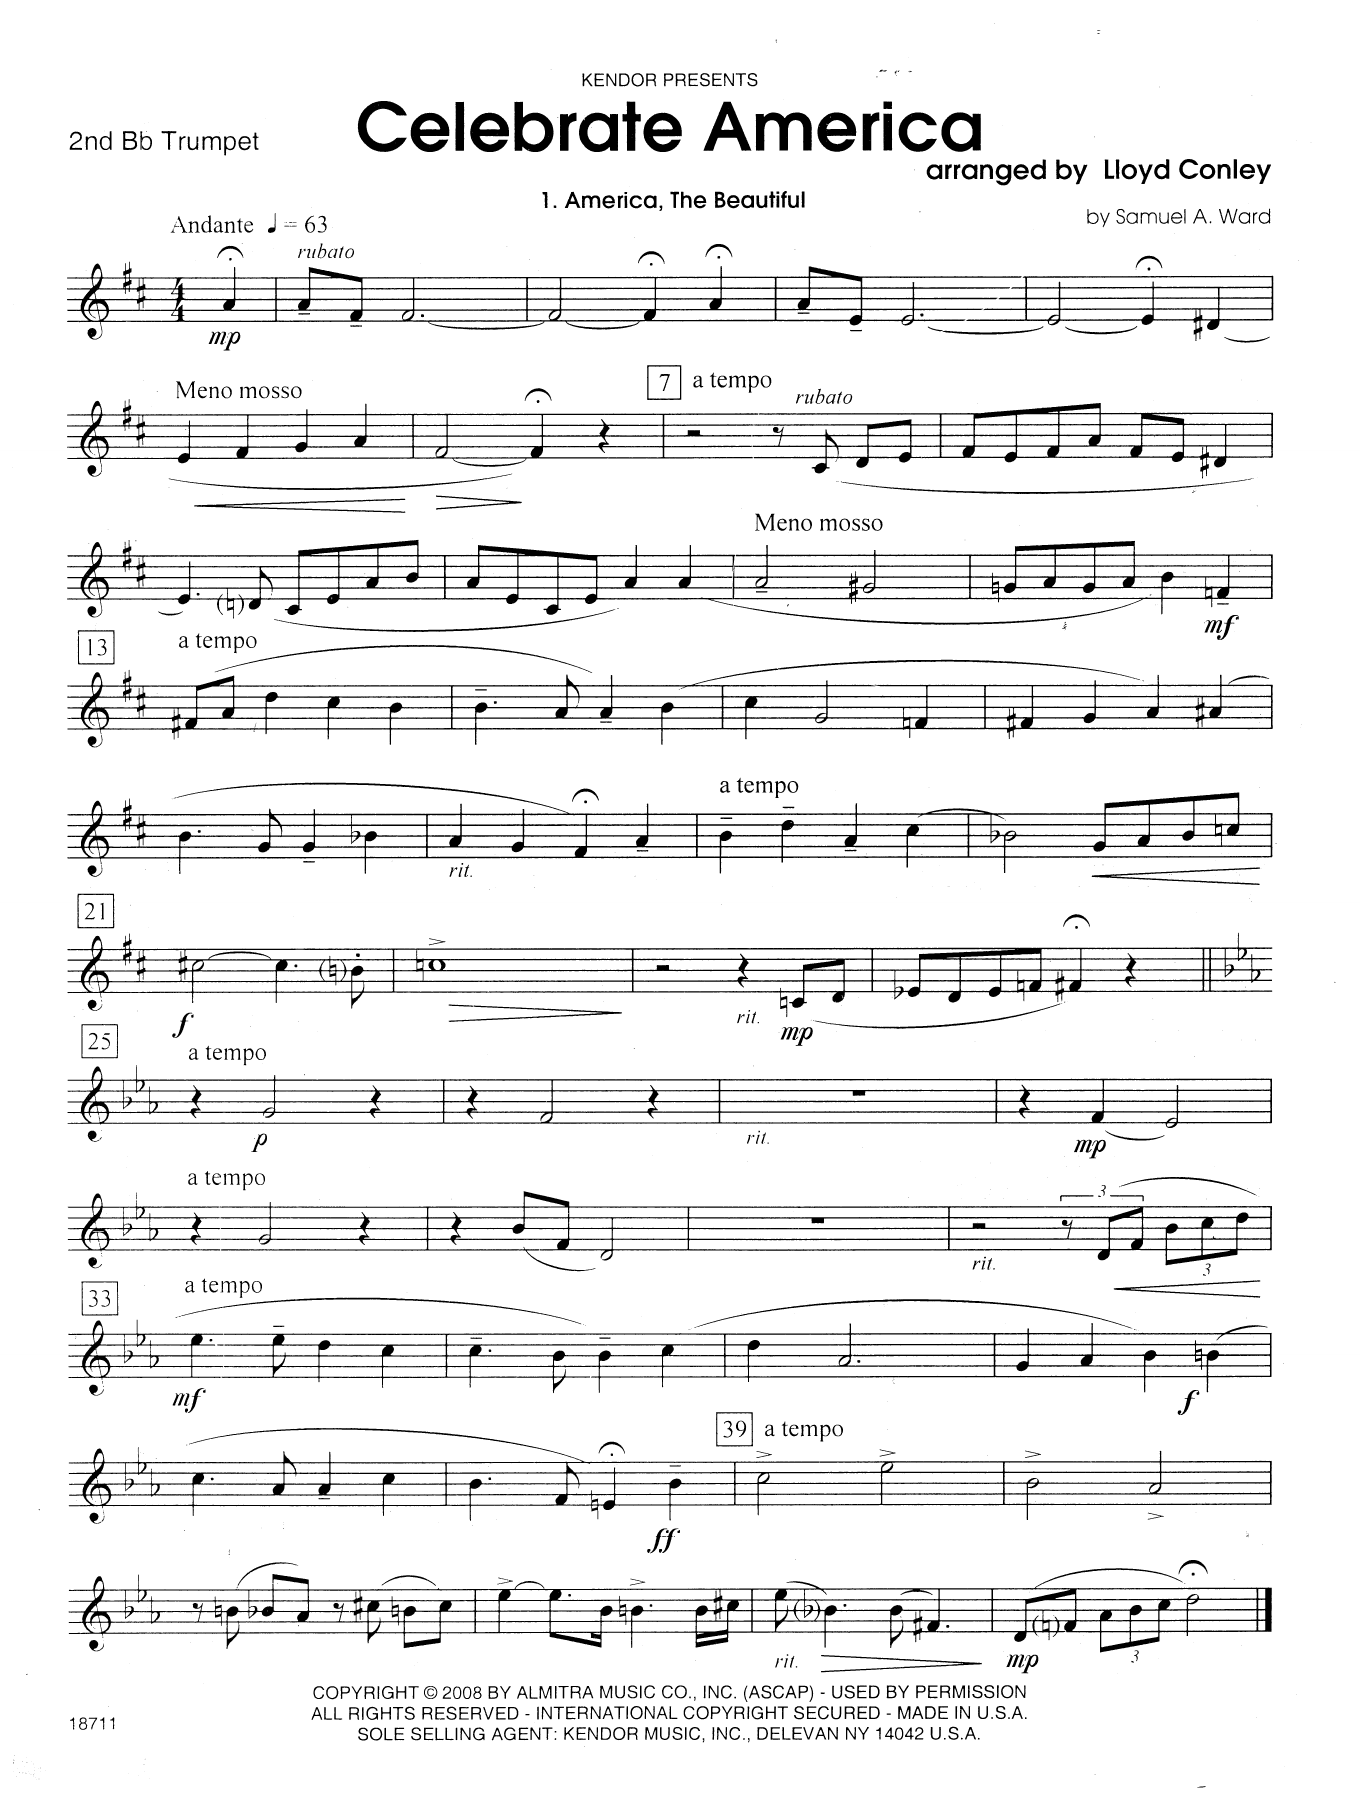 Download Lloyd Conley Celebrate America - 2nd Bb Trumpet Sheet Music